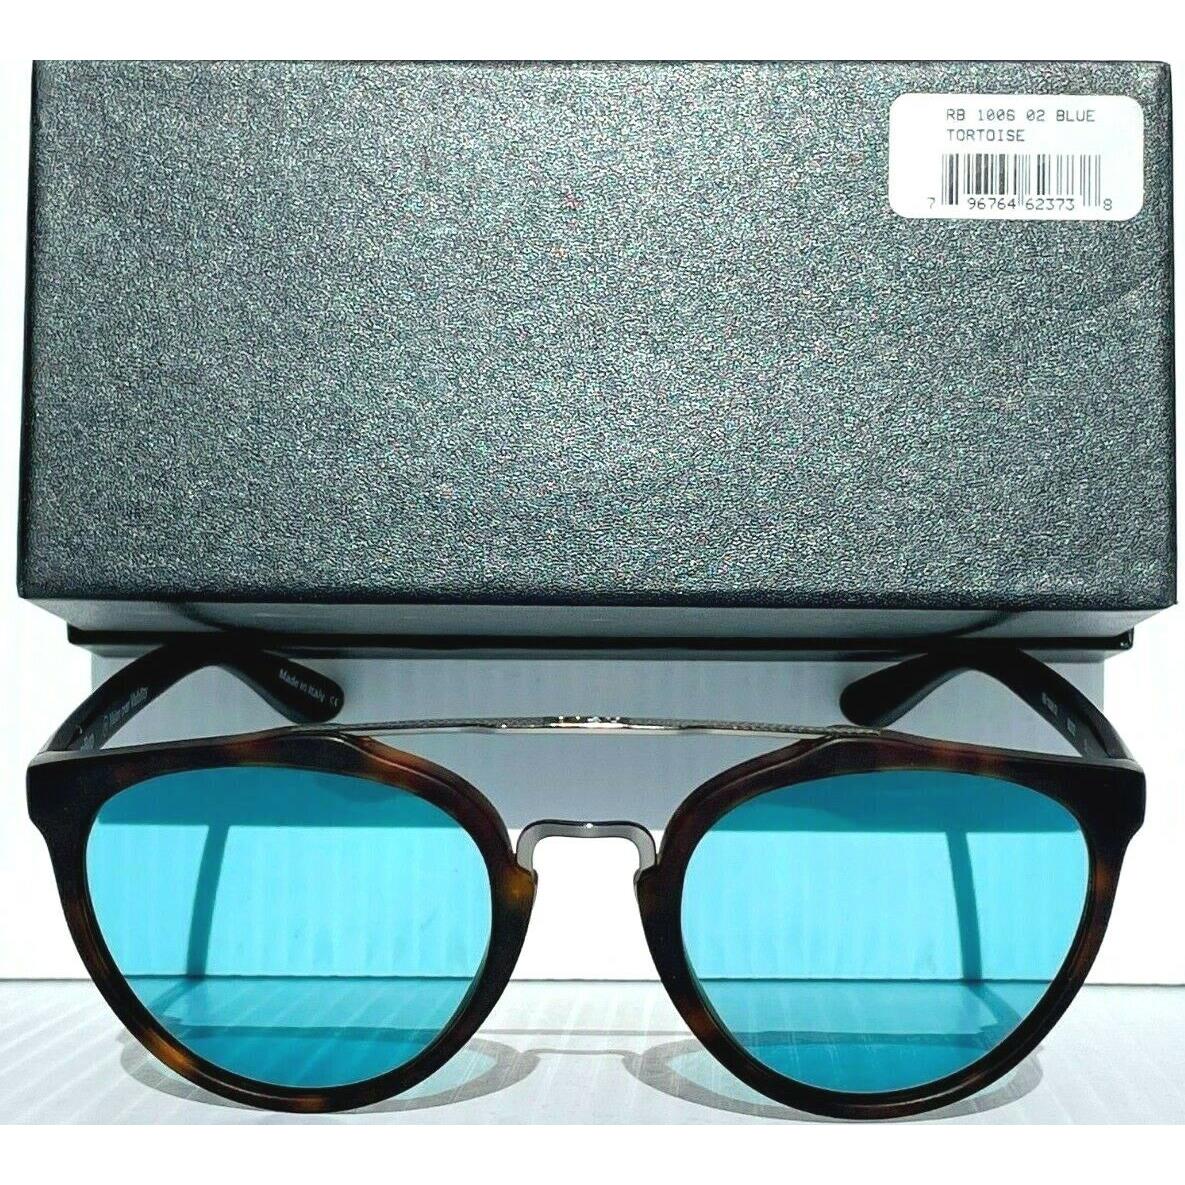 Revo sunglasses BUZZ Bono - Tortoise Frame, Blue Lens